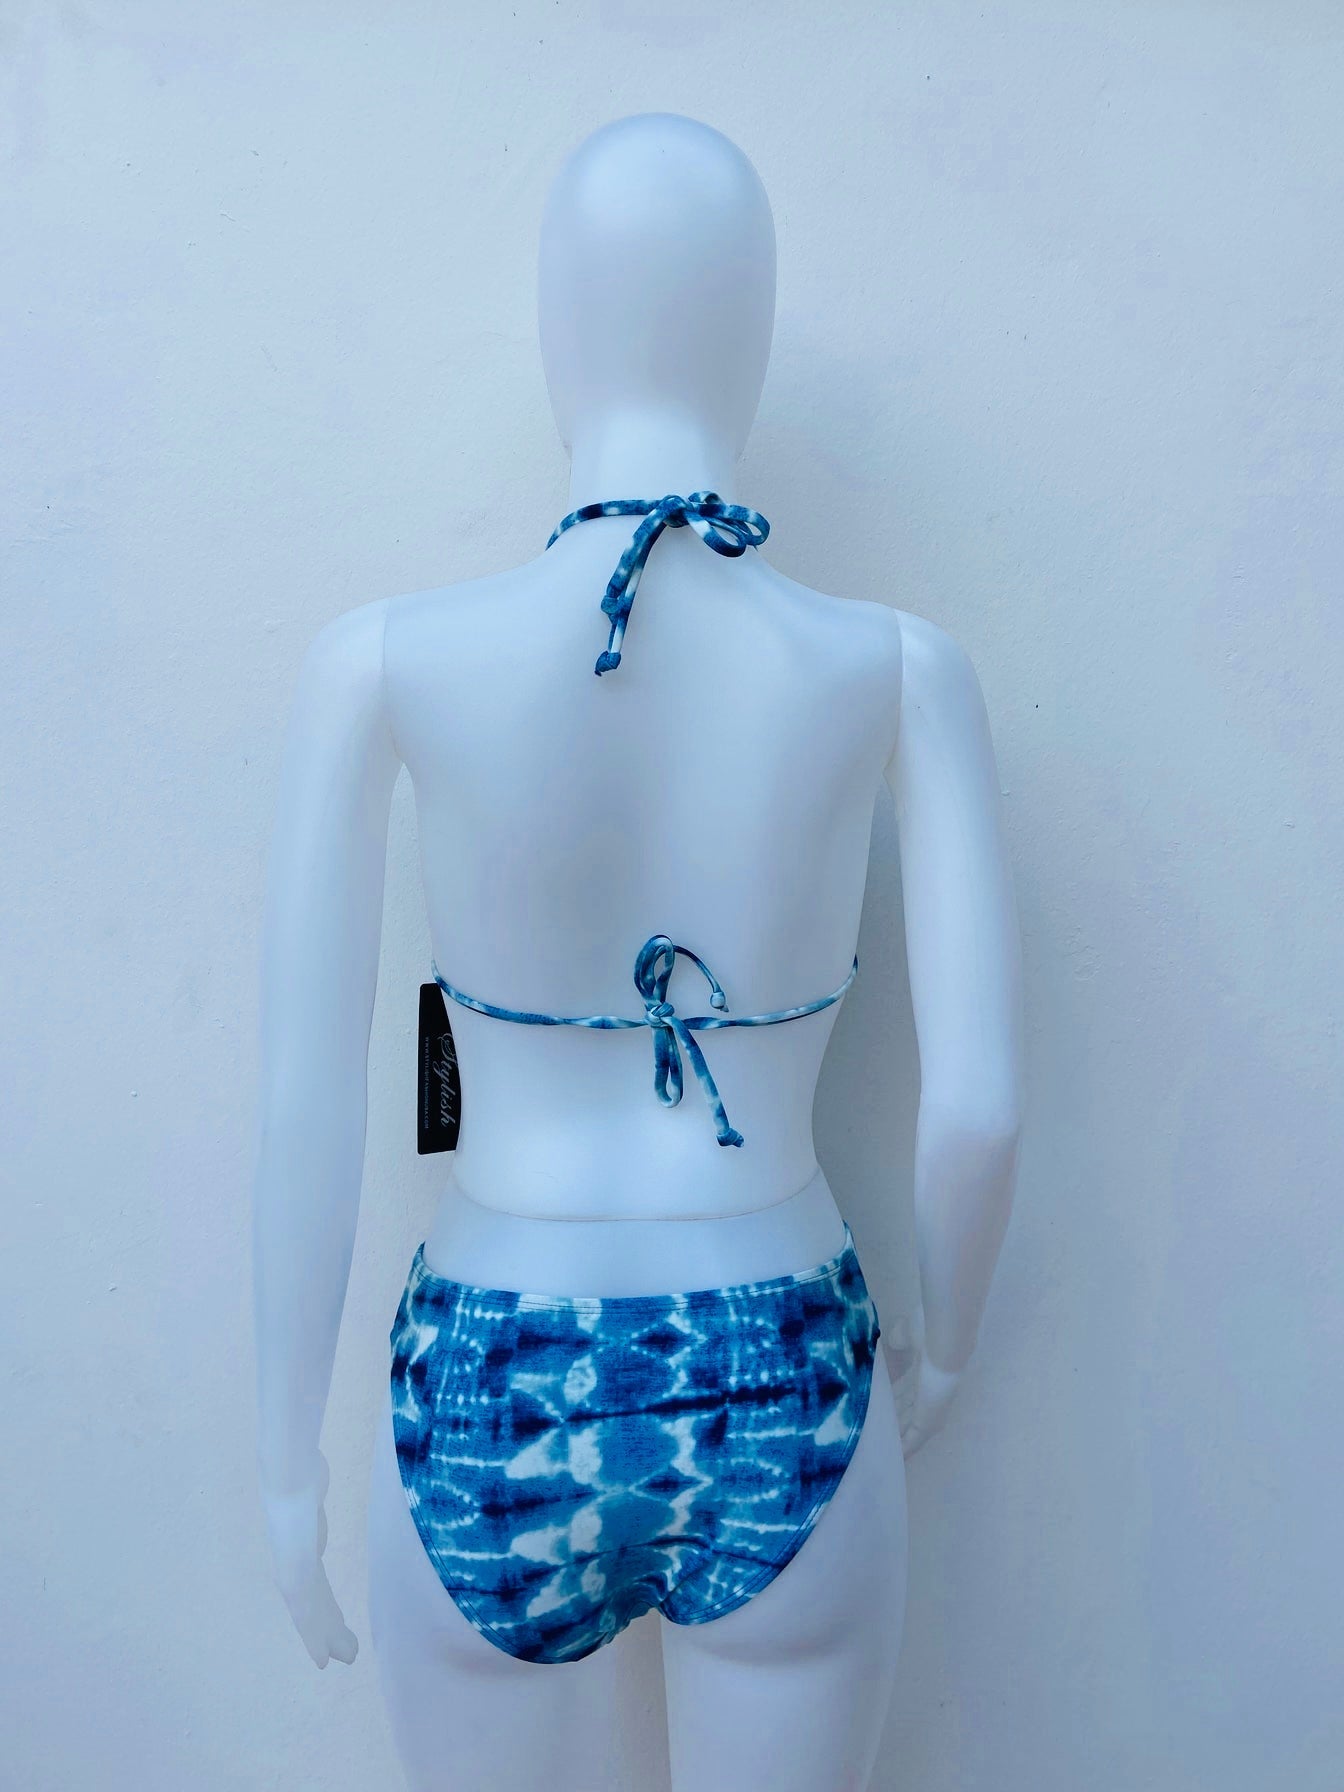 Biquini Stylish Swimwear phi al degradado azul con blanco con diseño de bolitas plateadas al frente